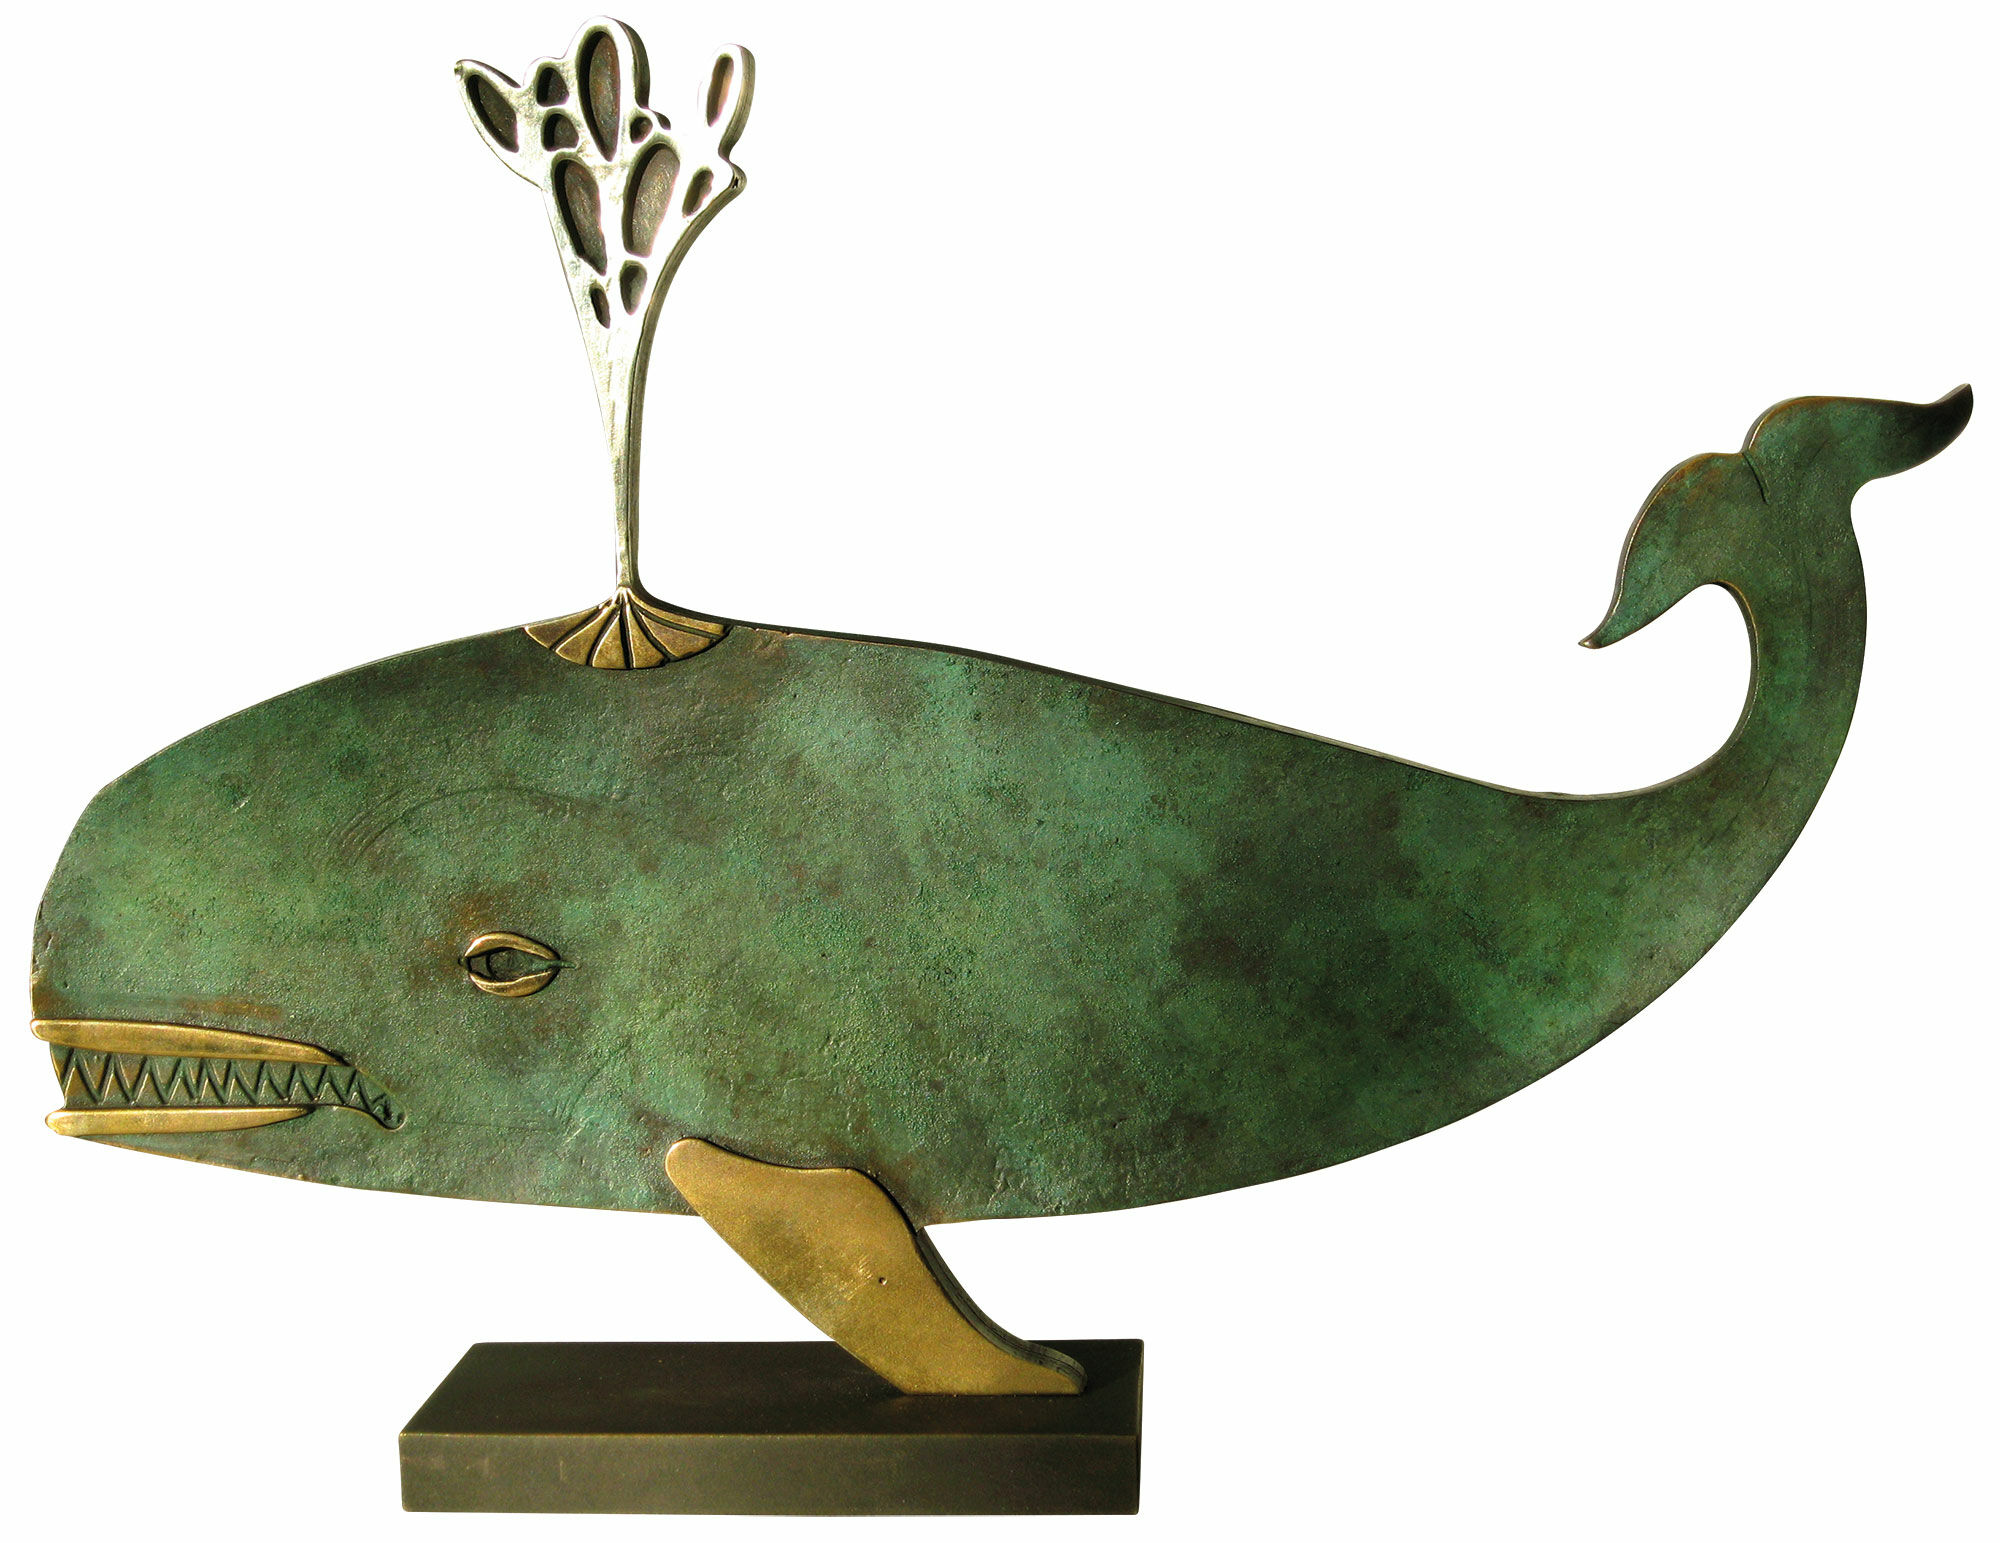 Sculpture "Whale", bronze by Paul Wunderlich